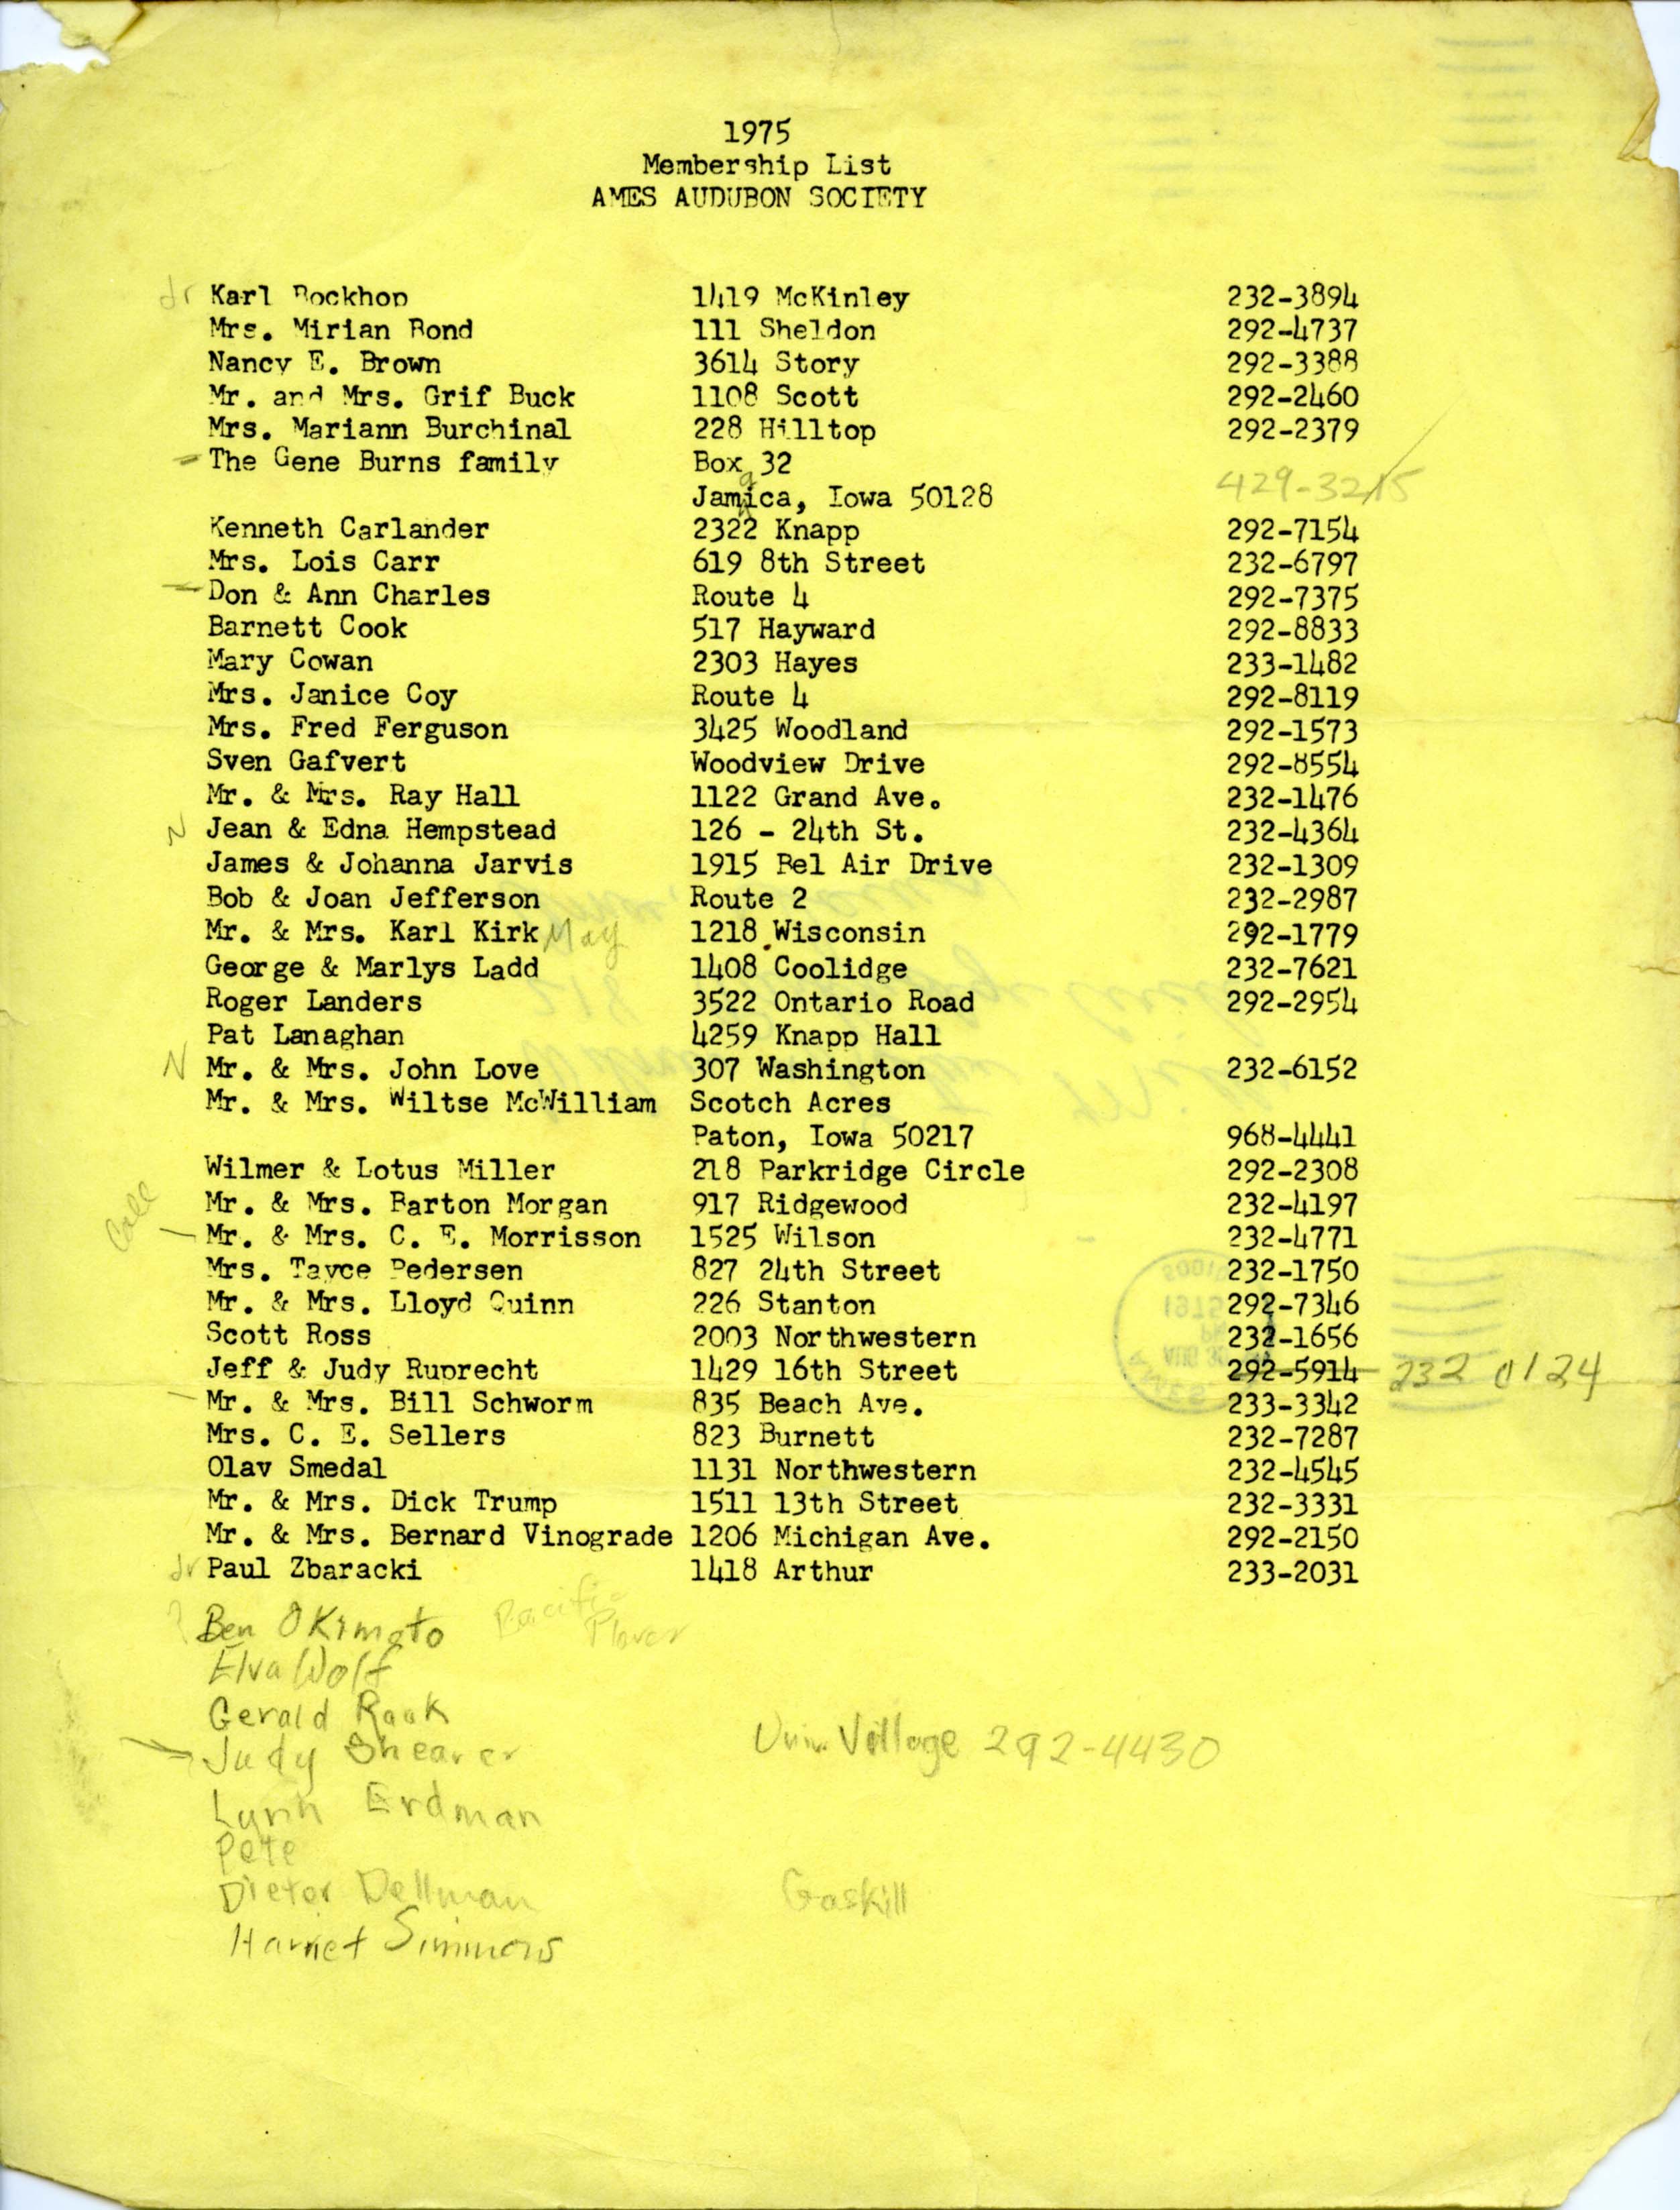 Ames Audubon Society membership list, 1975